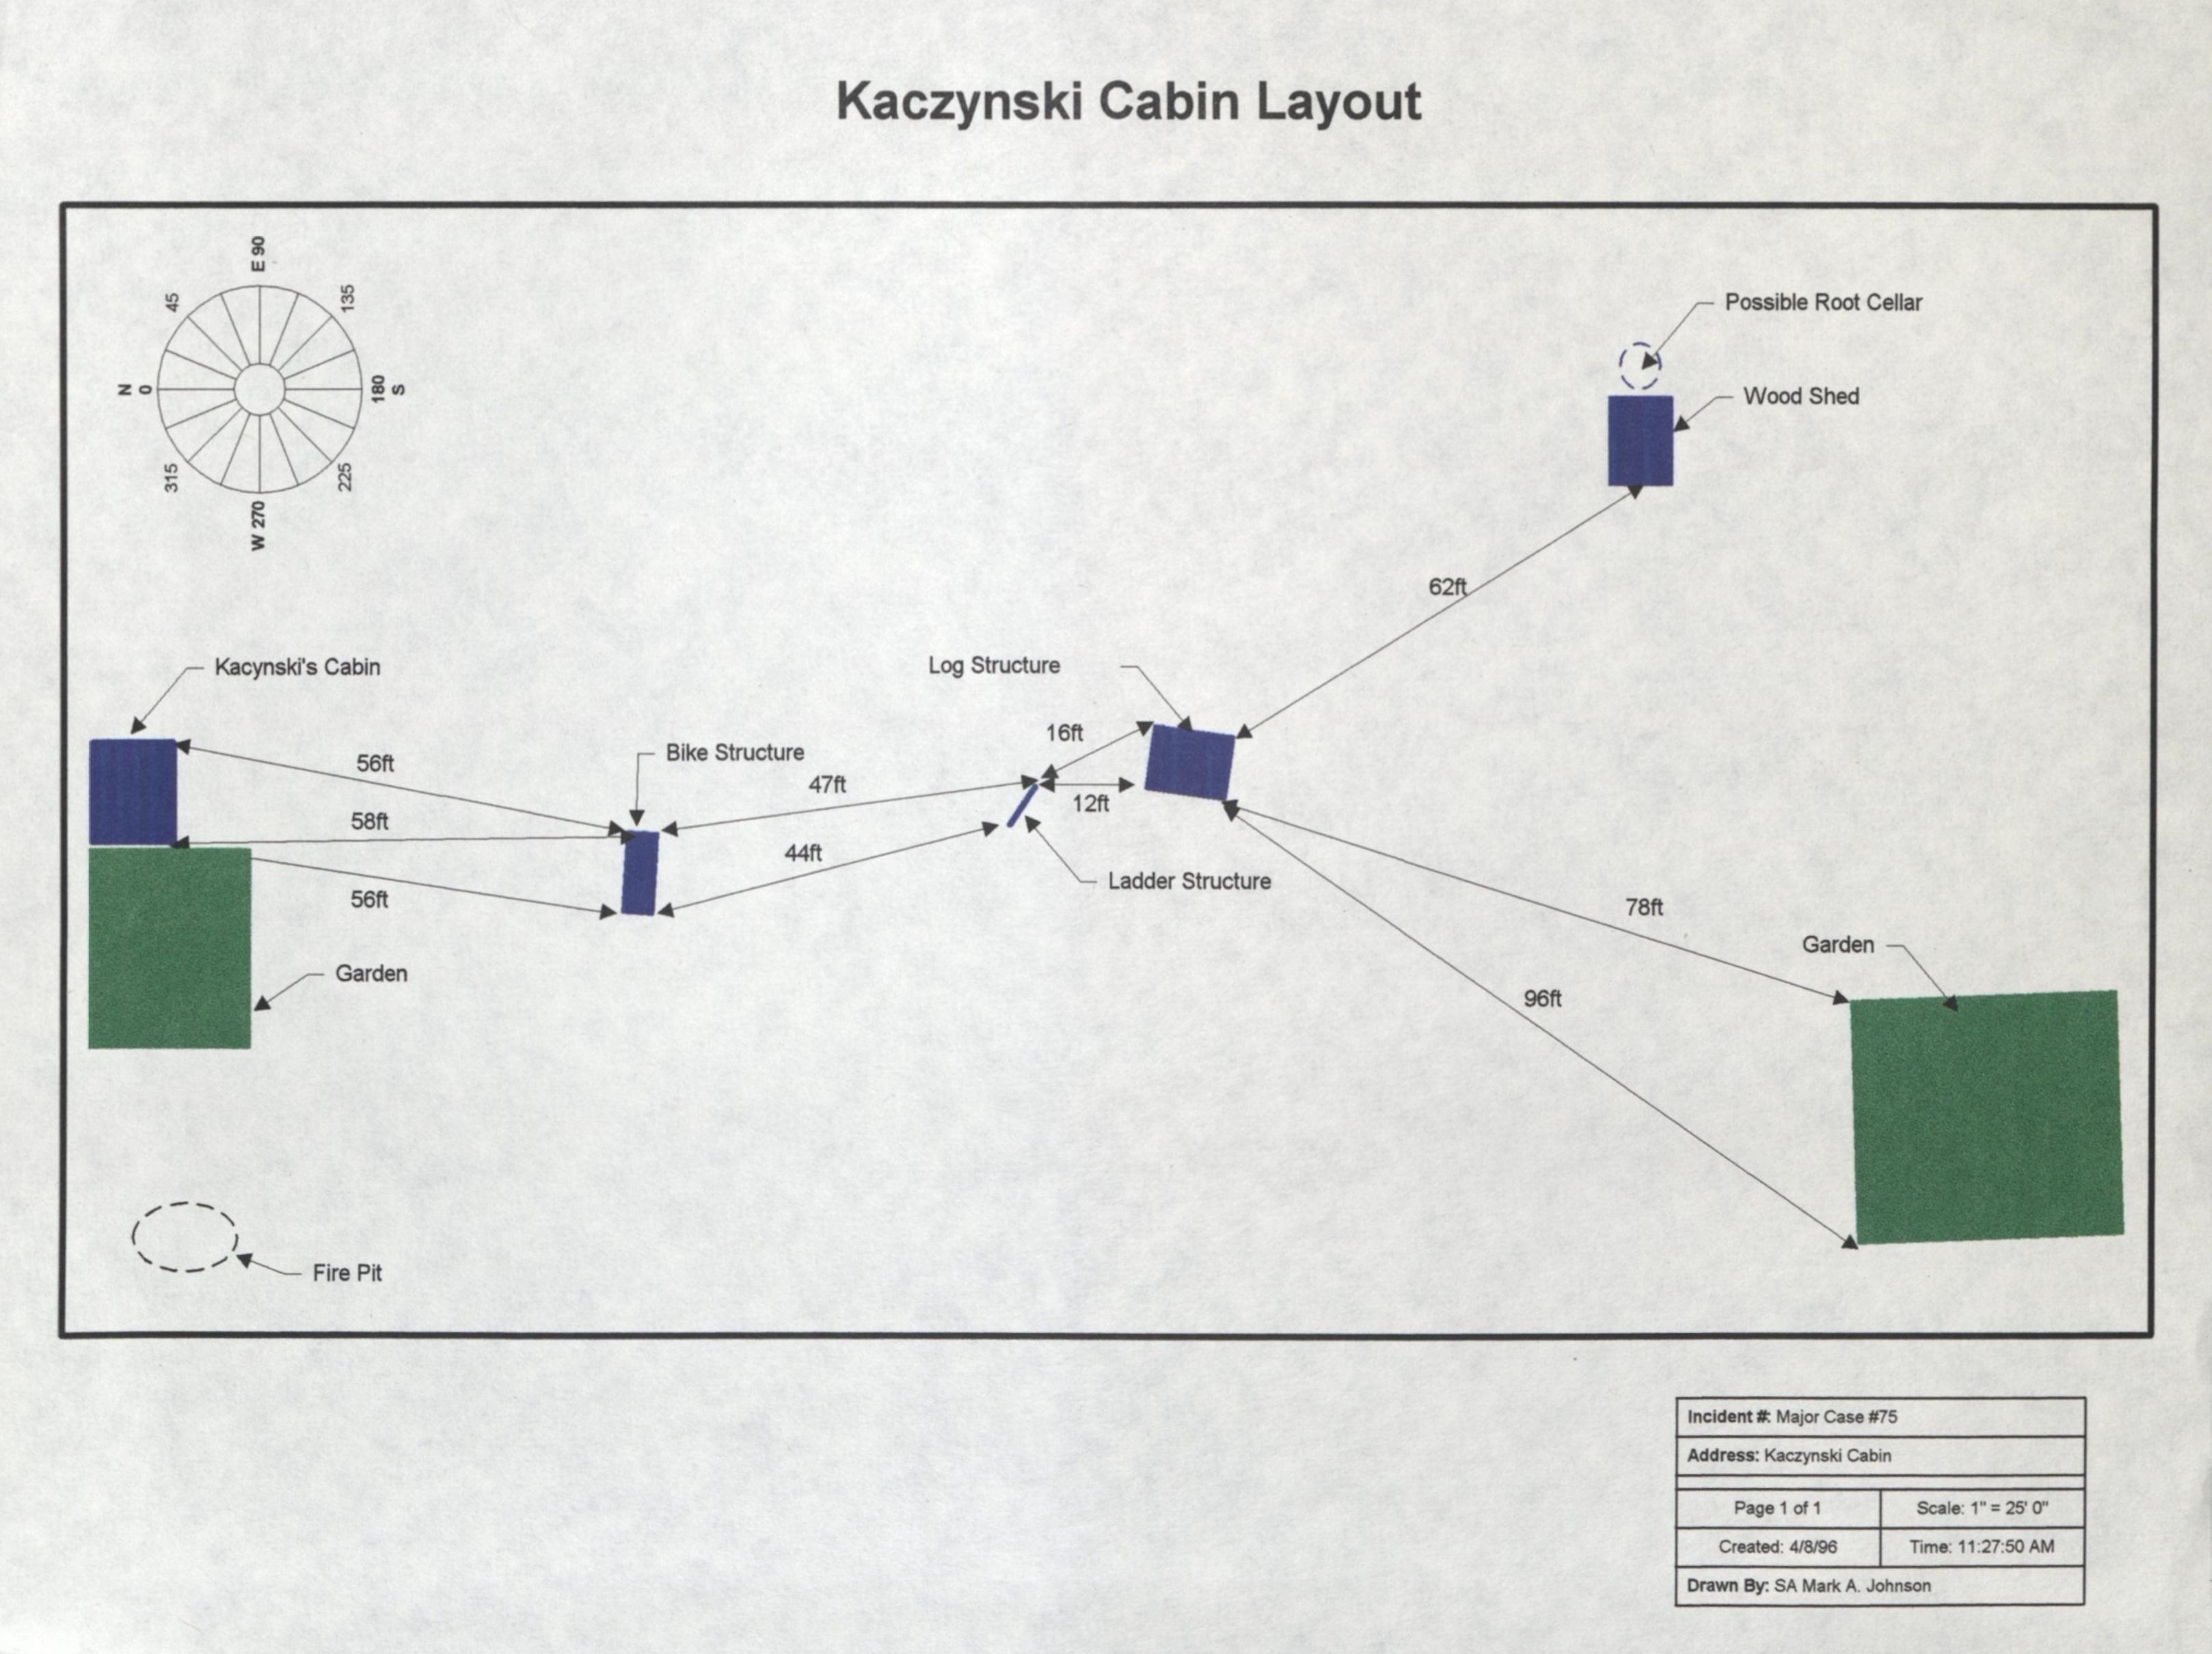 k-c-kaczynski-cabin-layout-1.jpg